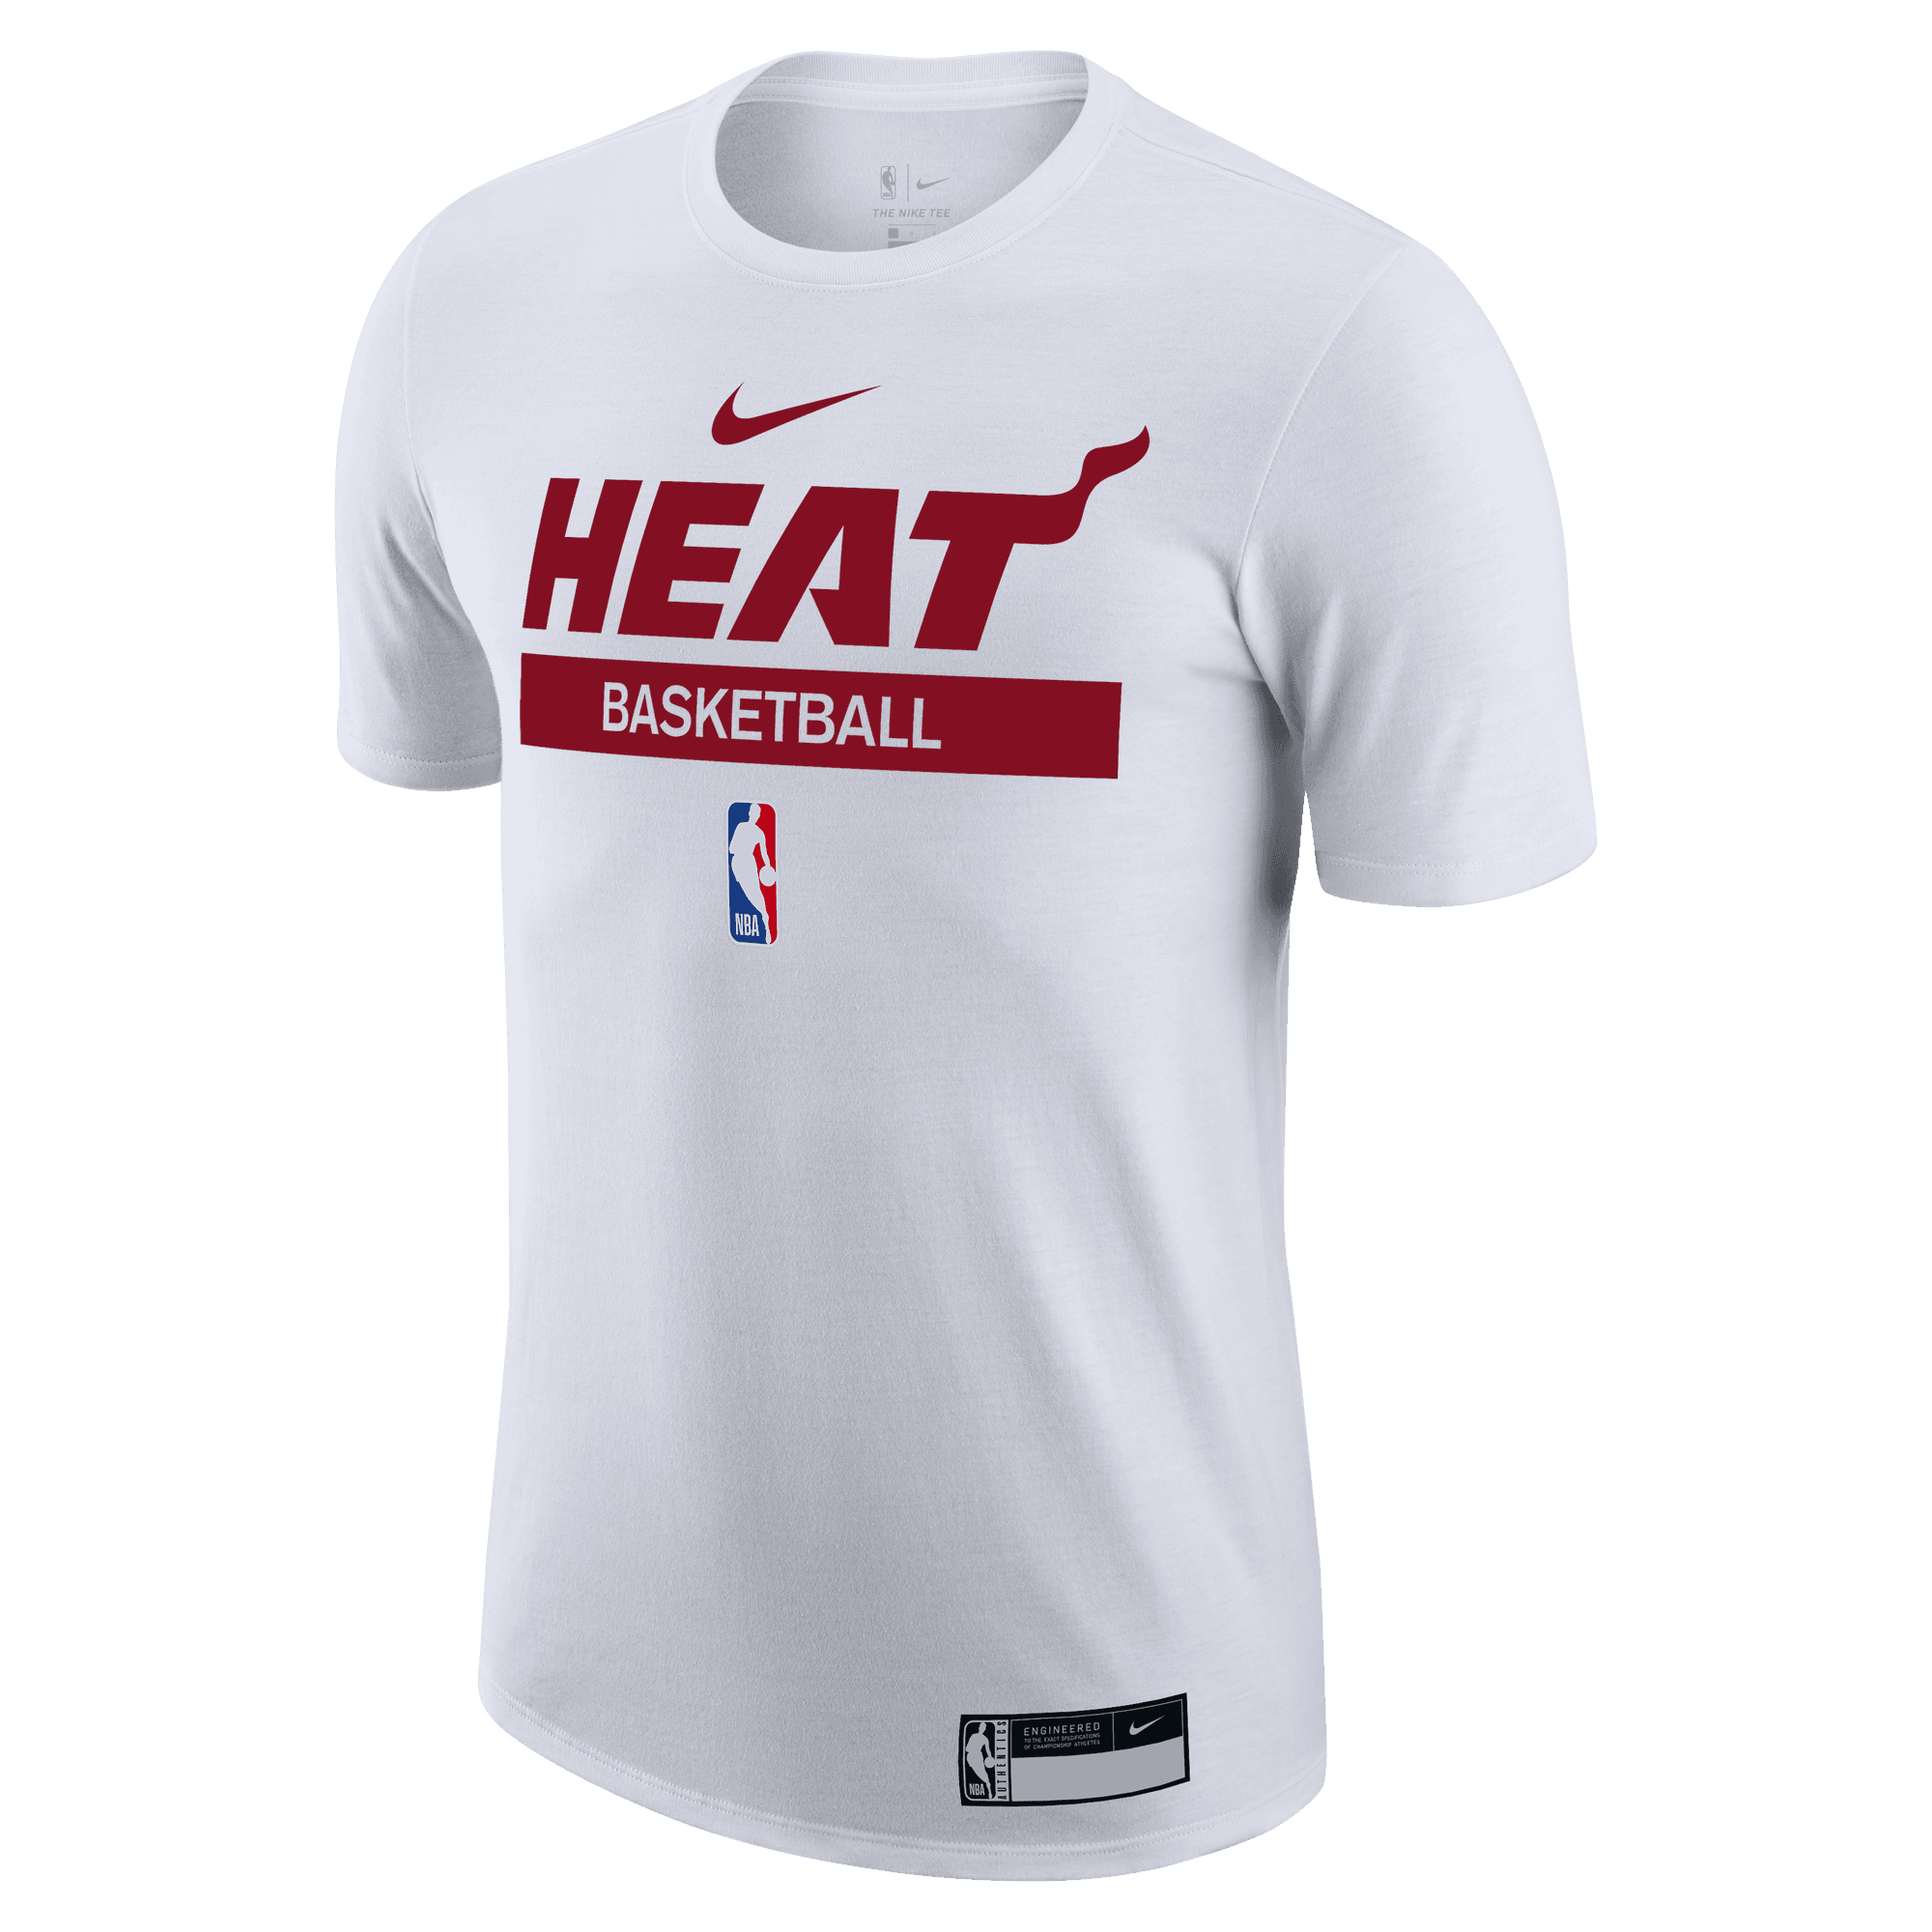 Miami Heat Basketball Jerseys for sale